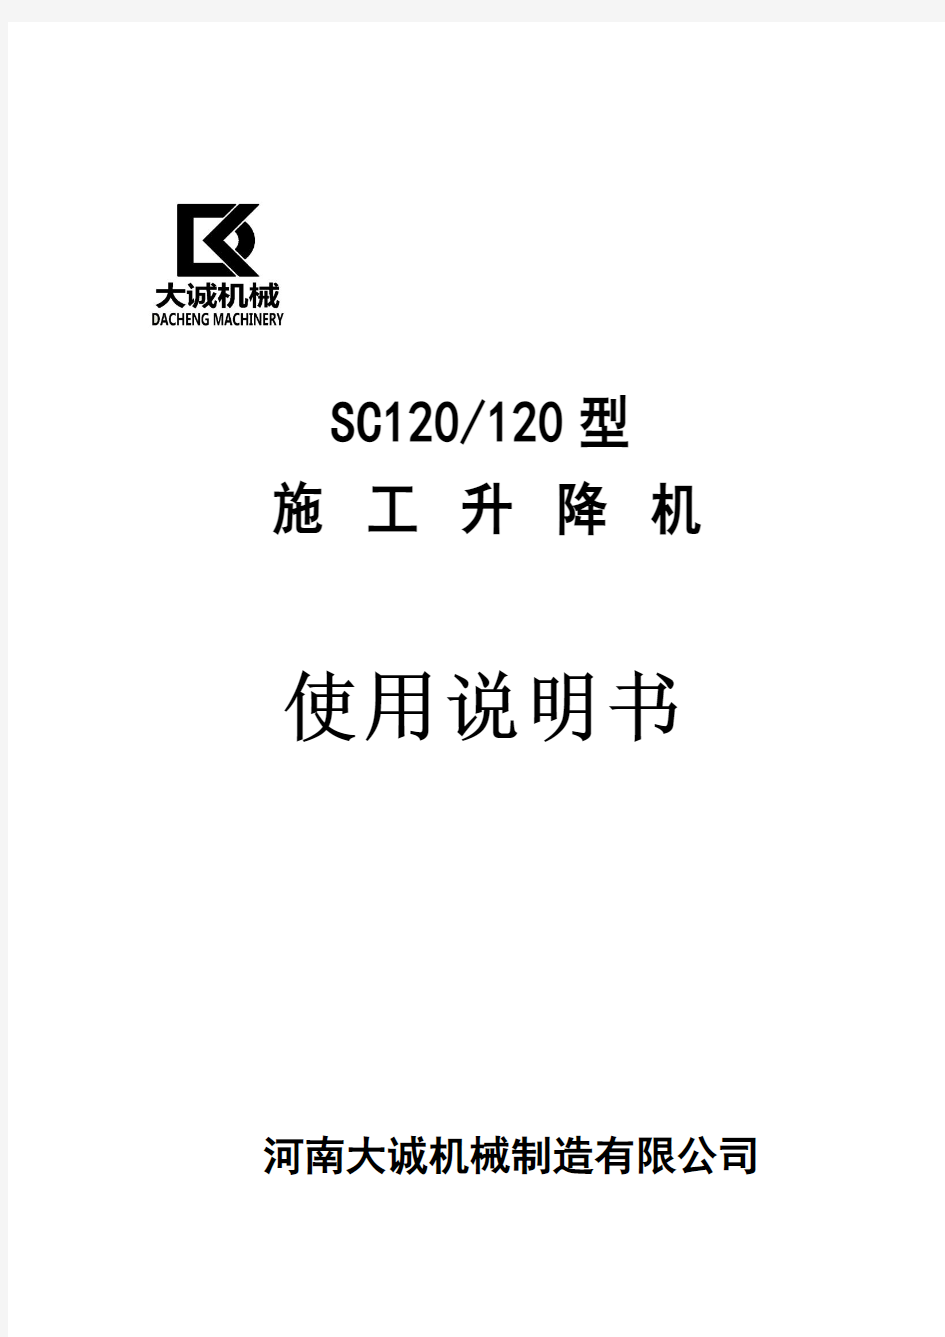 SC120-120齿轮齿条式升降机使用说明书